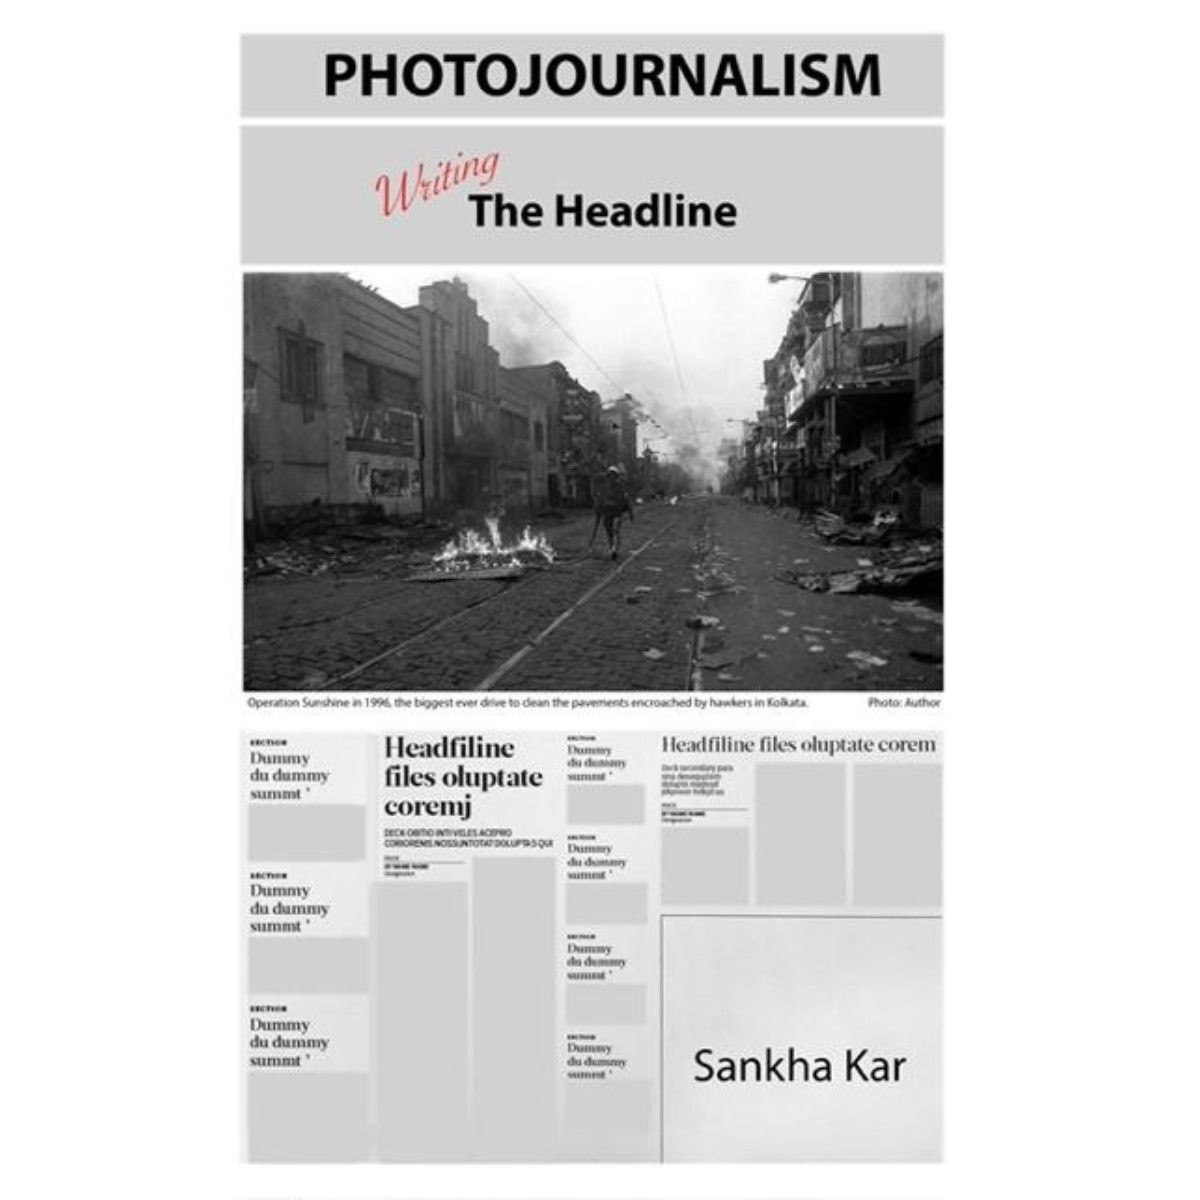 PHOTOJOURNALISM - Writing The Headline  